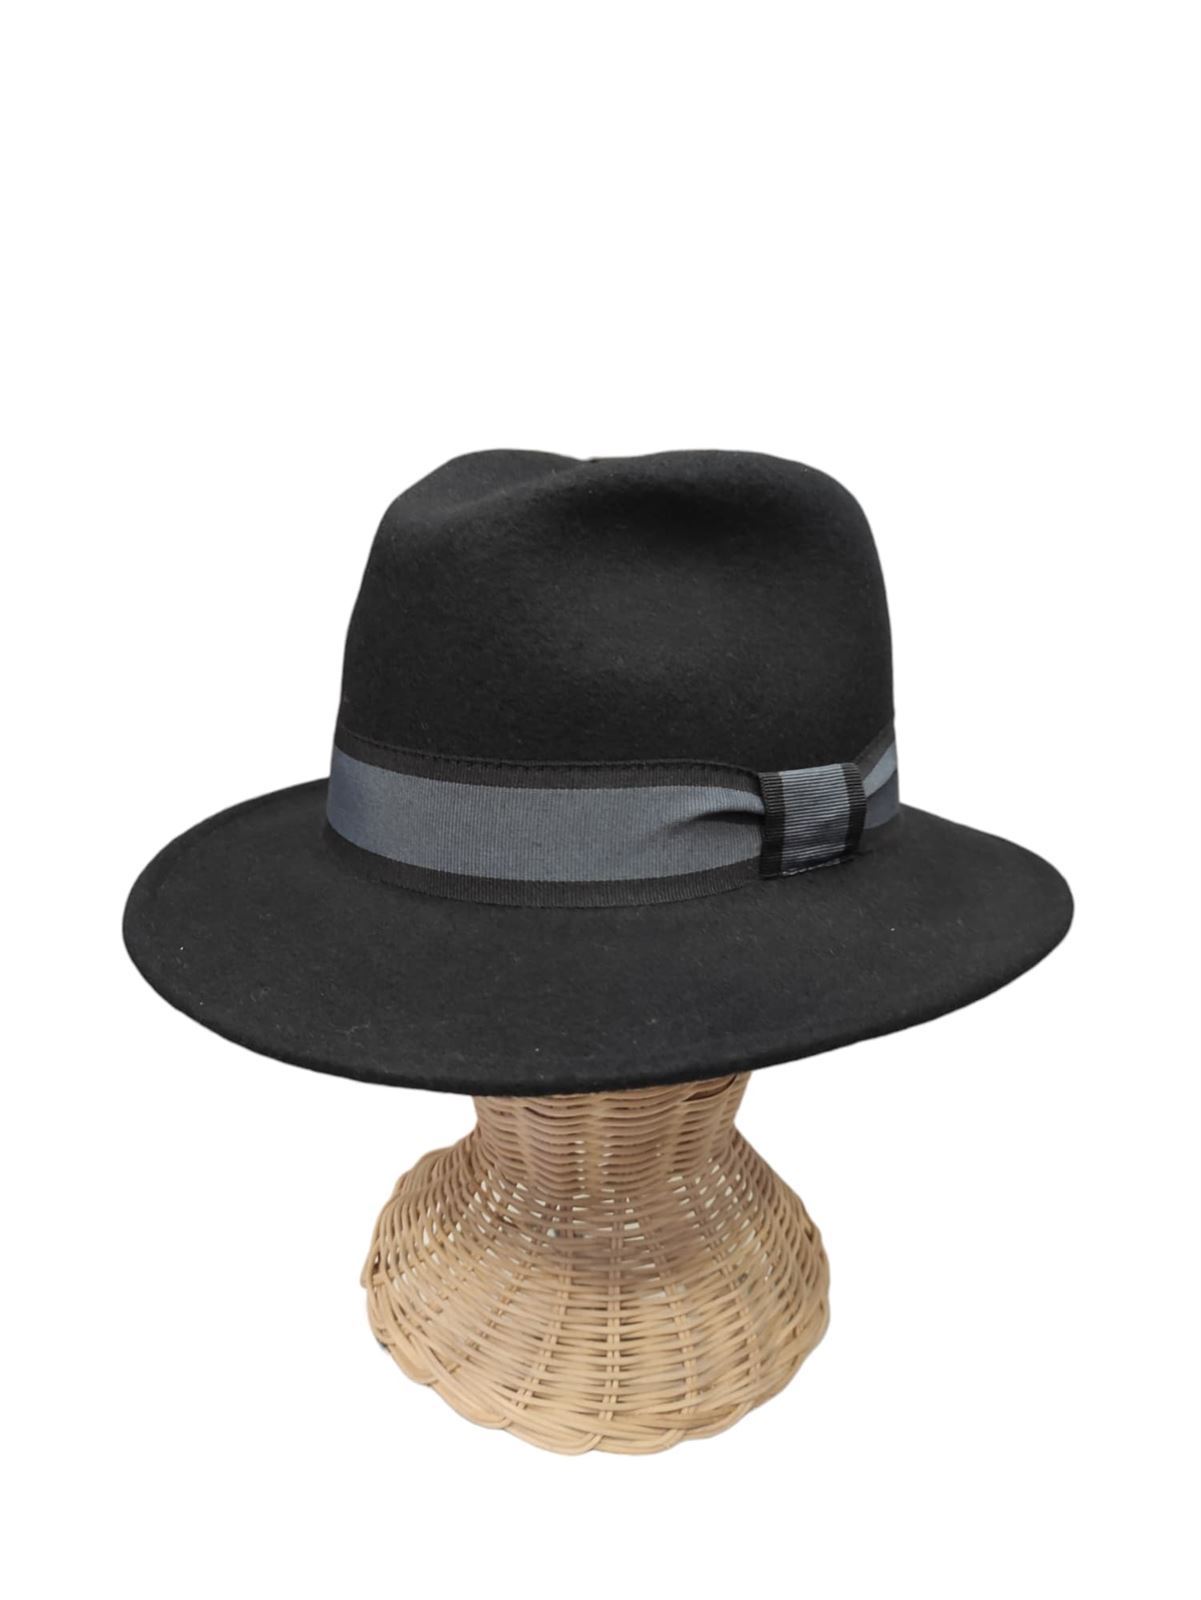 Sombrero borsalino negro de lana - Imagen 1